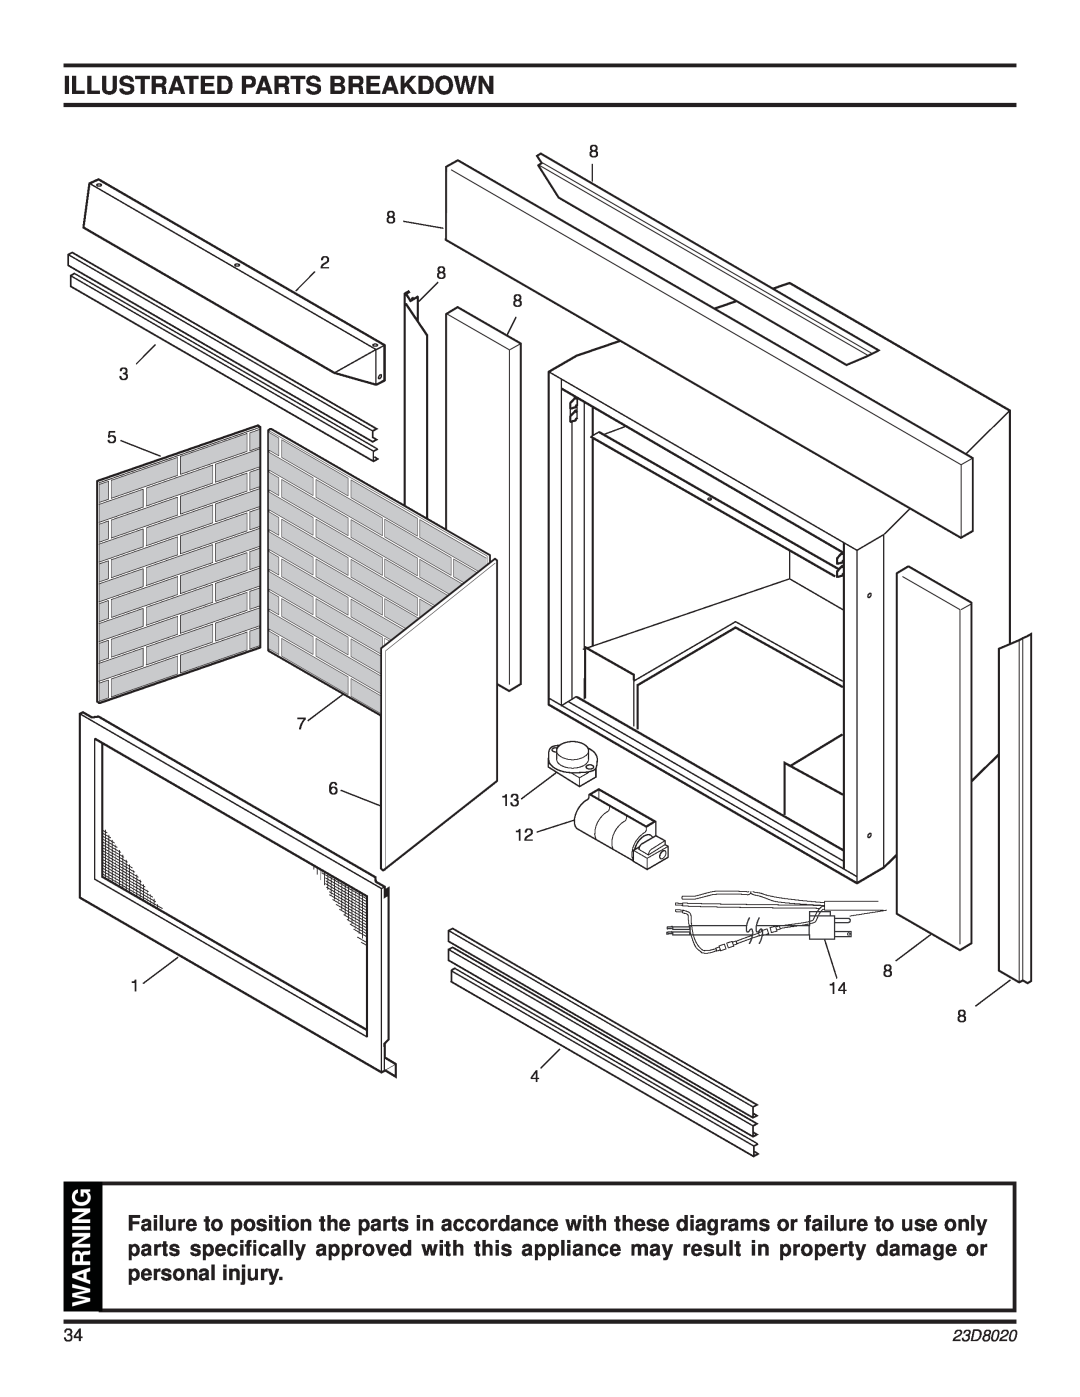 Monessen Hearth DIS33G manual Illustrated Parts Breakdown, 8 8 28 8 3, 23D8020 